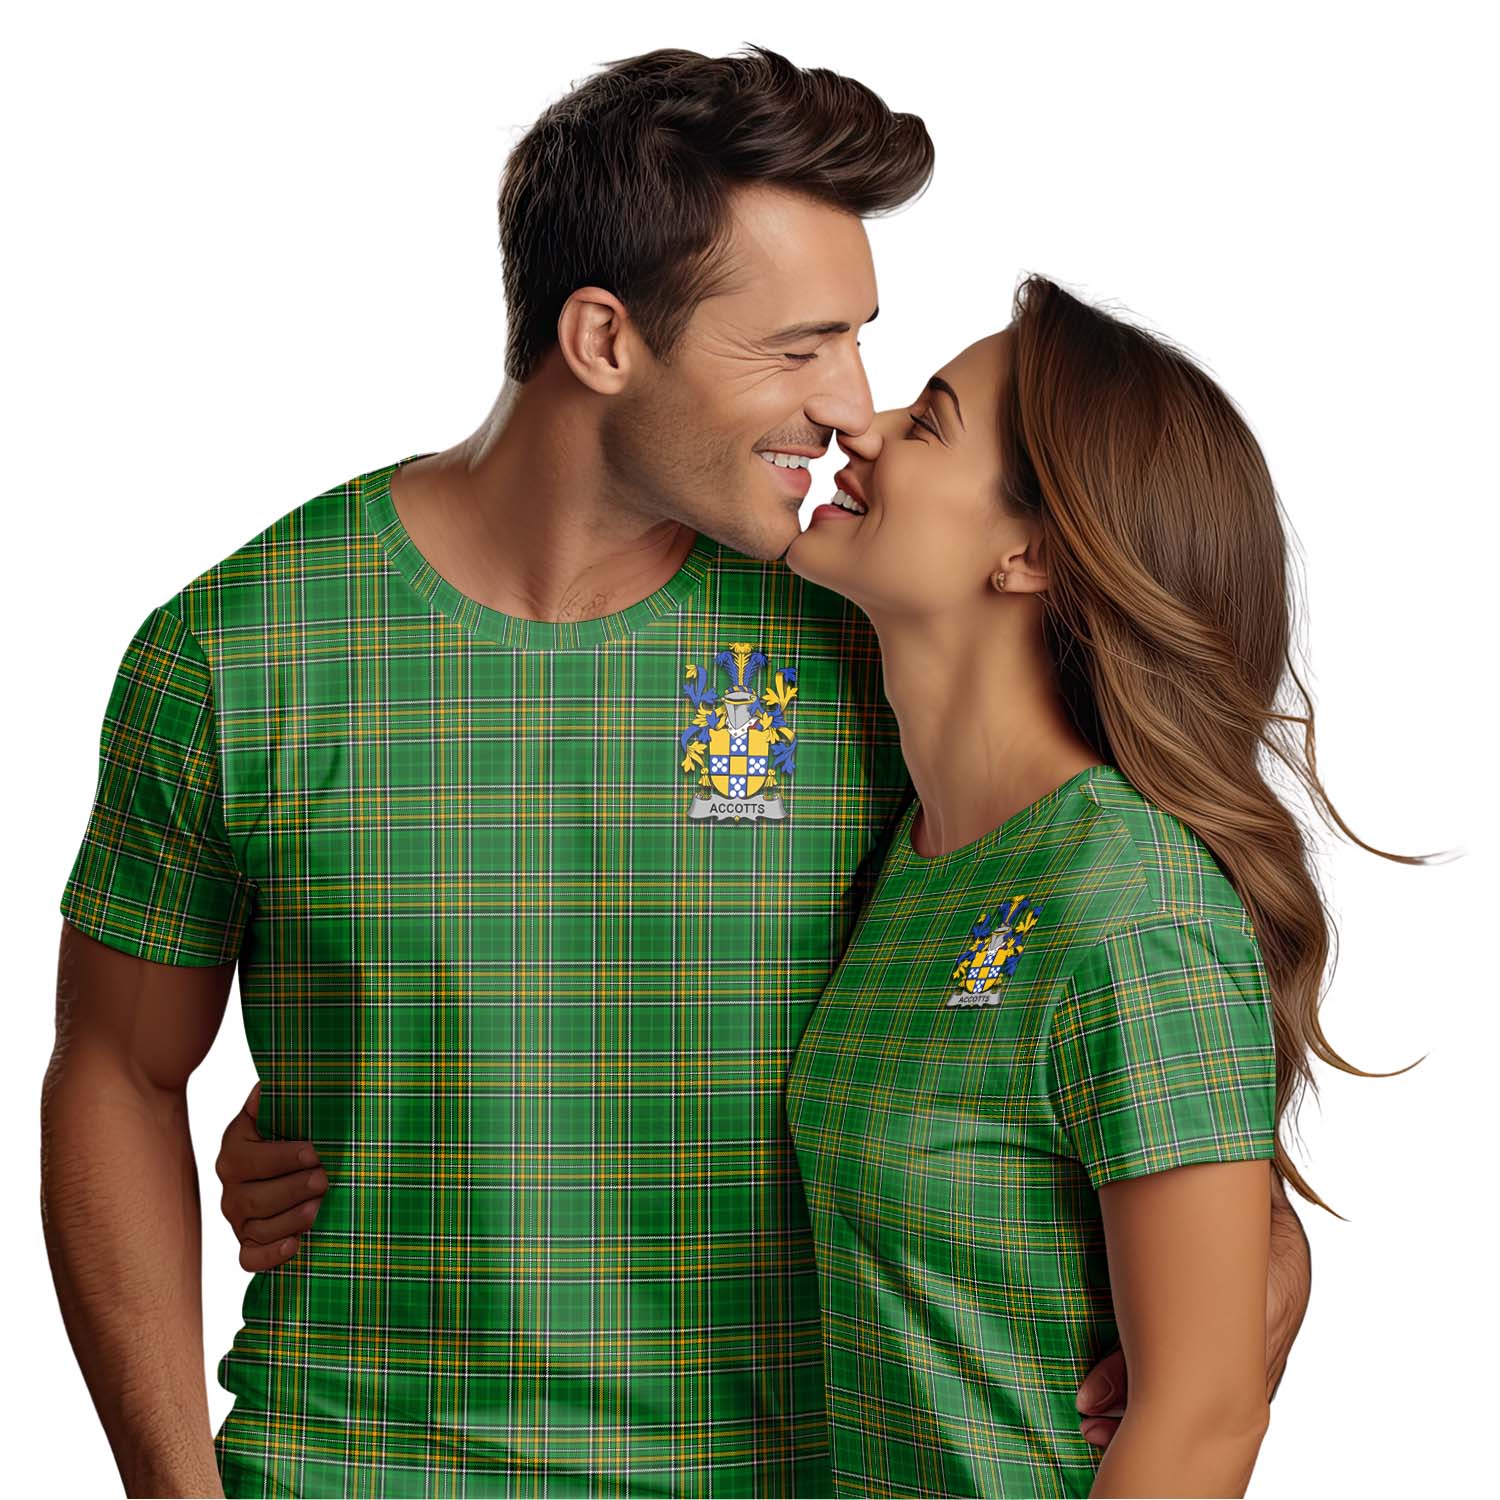 Tartan Vibes Clothing Accotts Ireland Clan Tartan T-Shirt with Family Seal